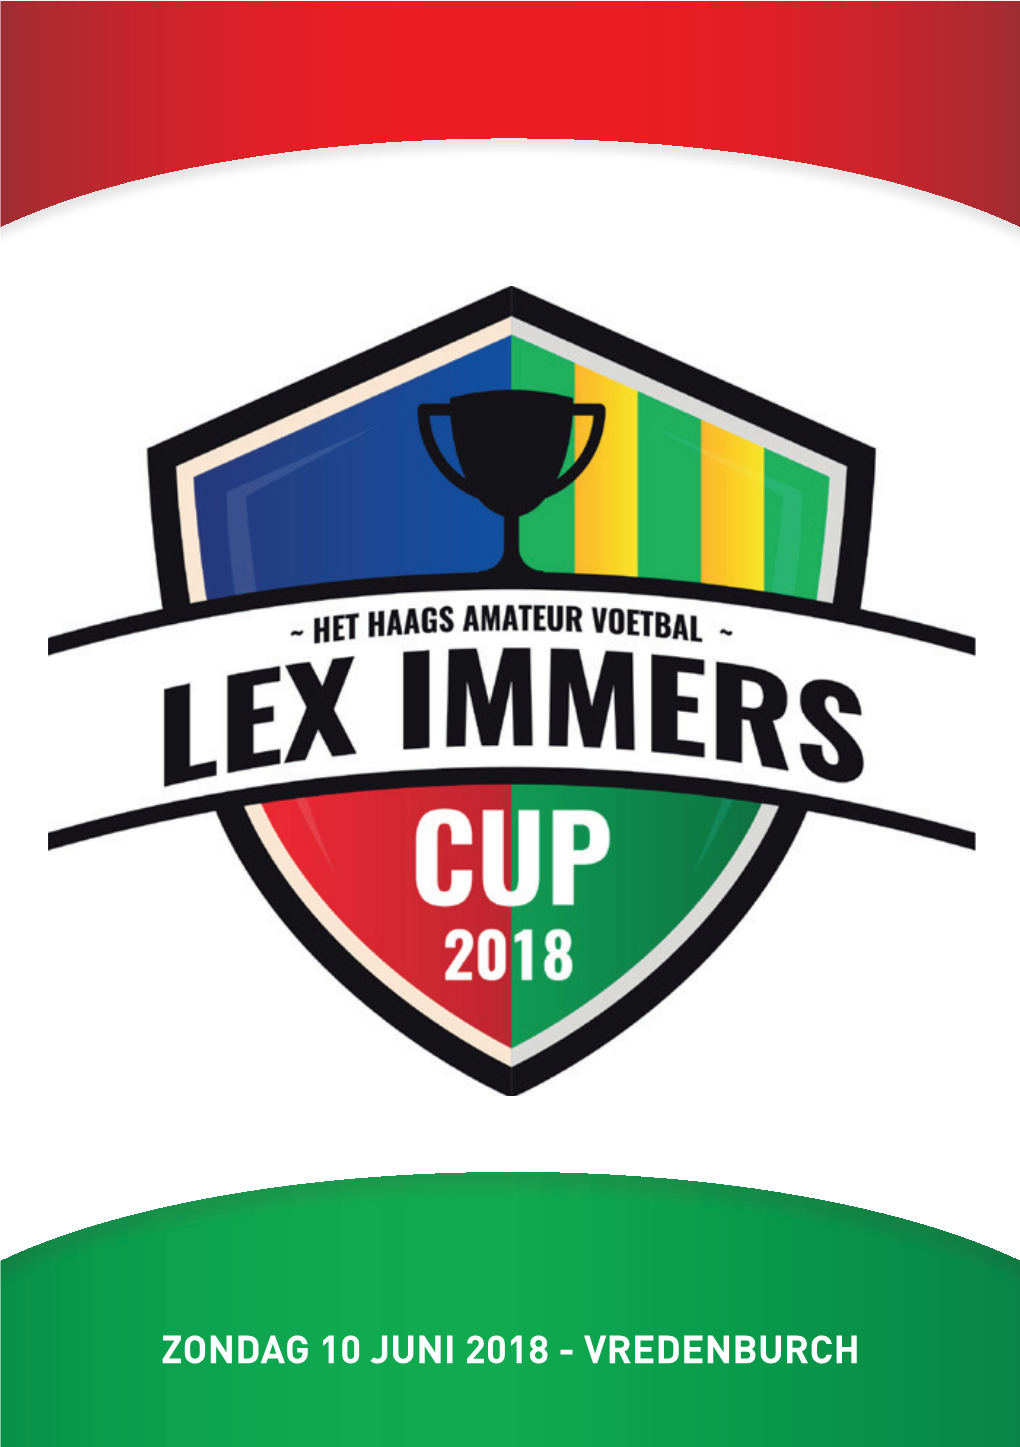 Zondag 10 Juni 2018 - Vredenburch Lex Immers Cup 2